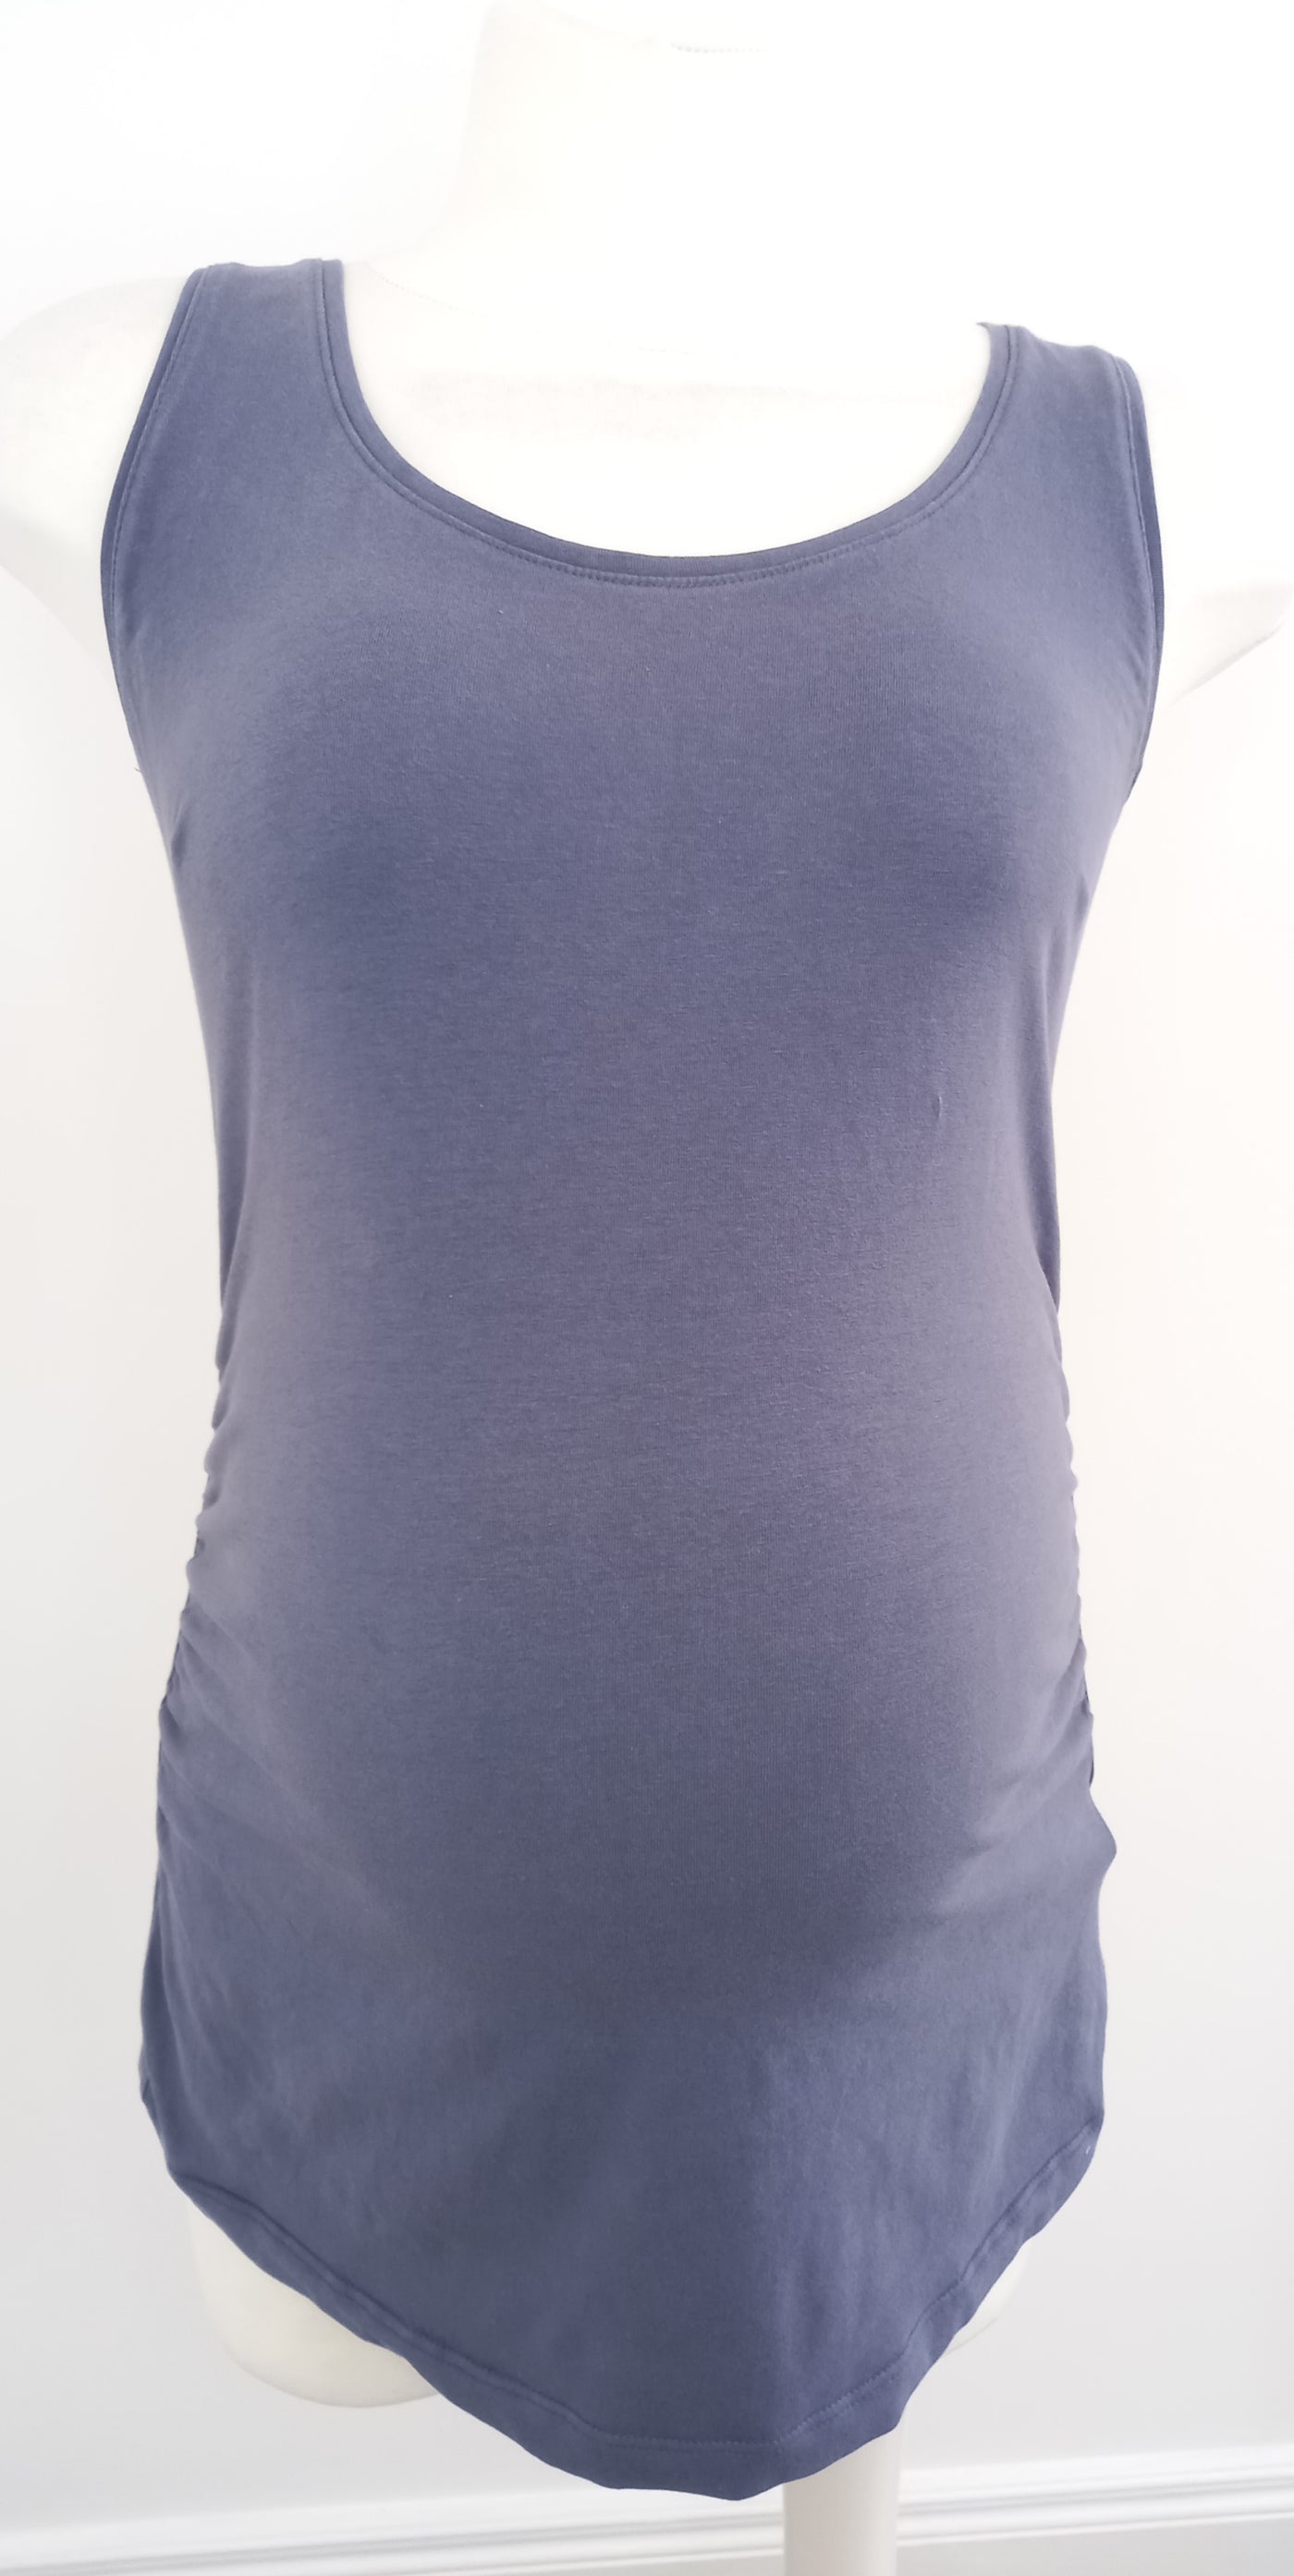 Esmara Blue/Grey Sleeveless Top - Size 14/16 (more like size 12/14)